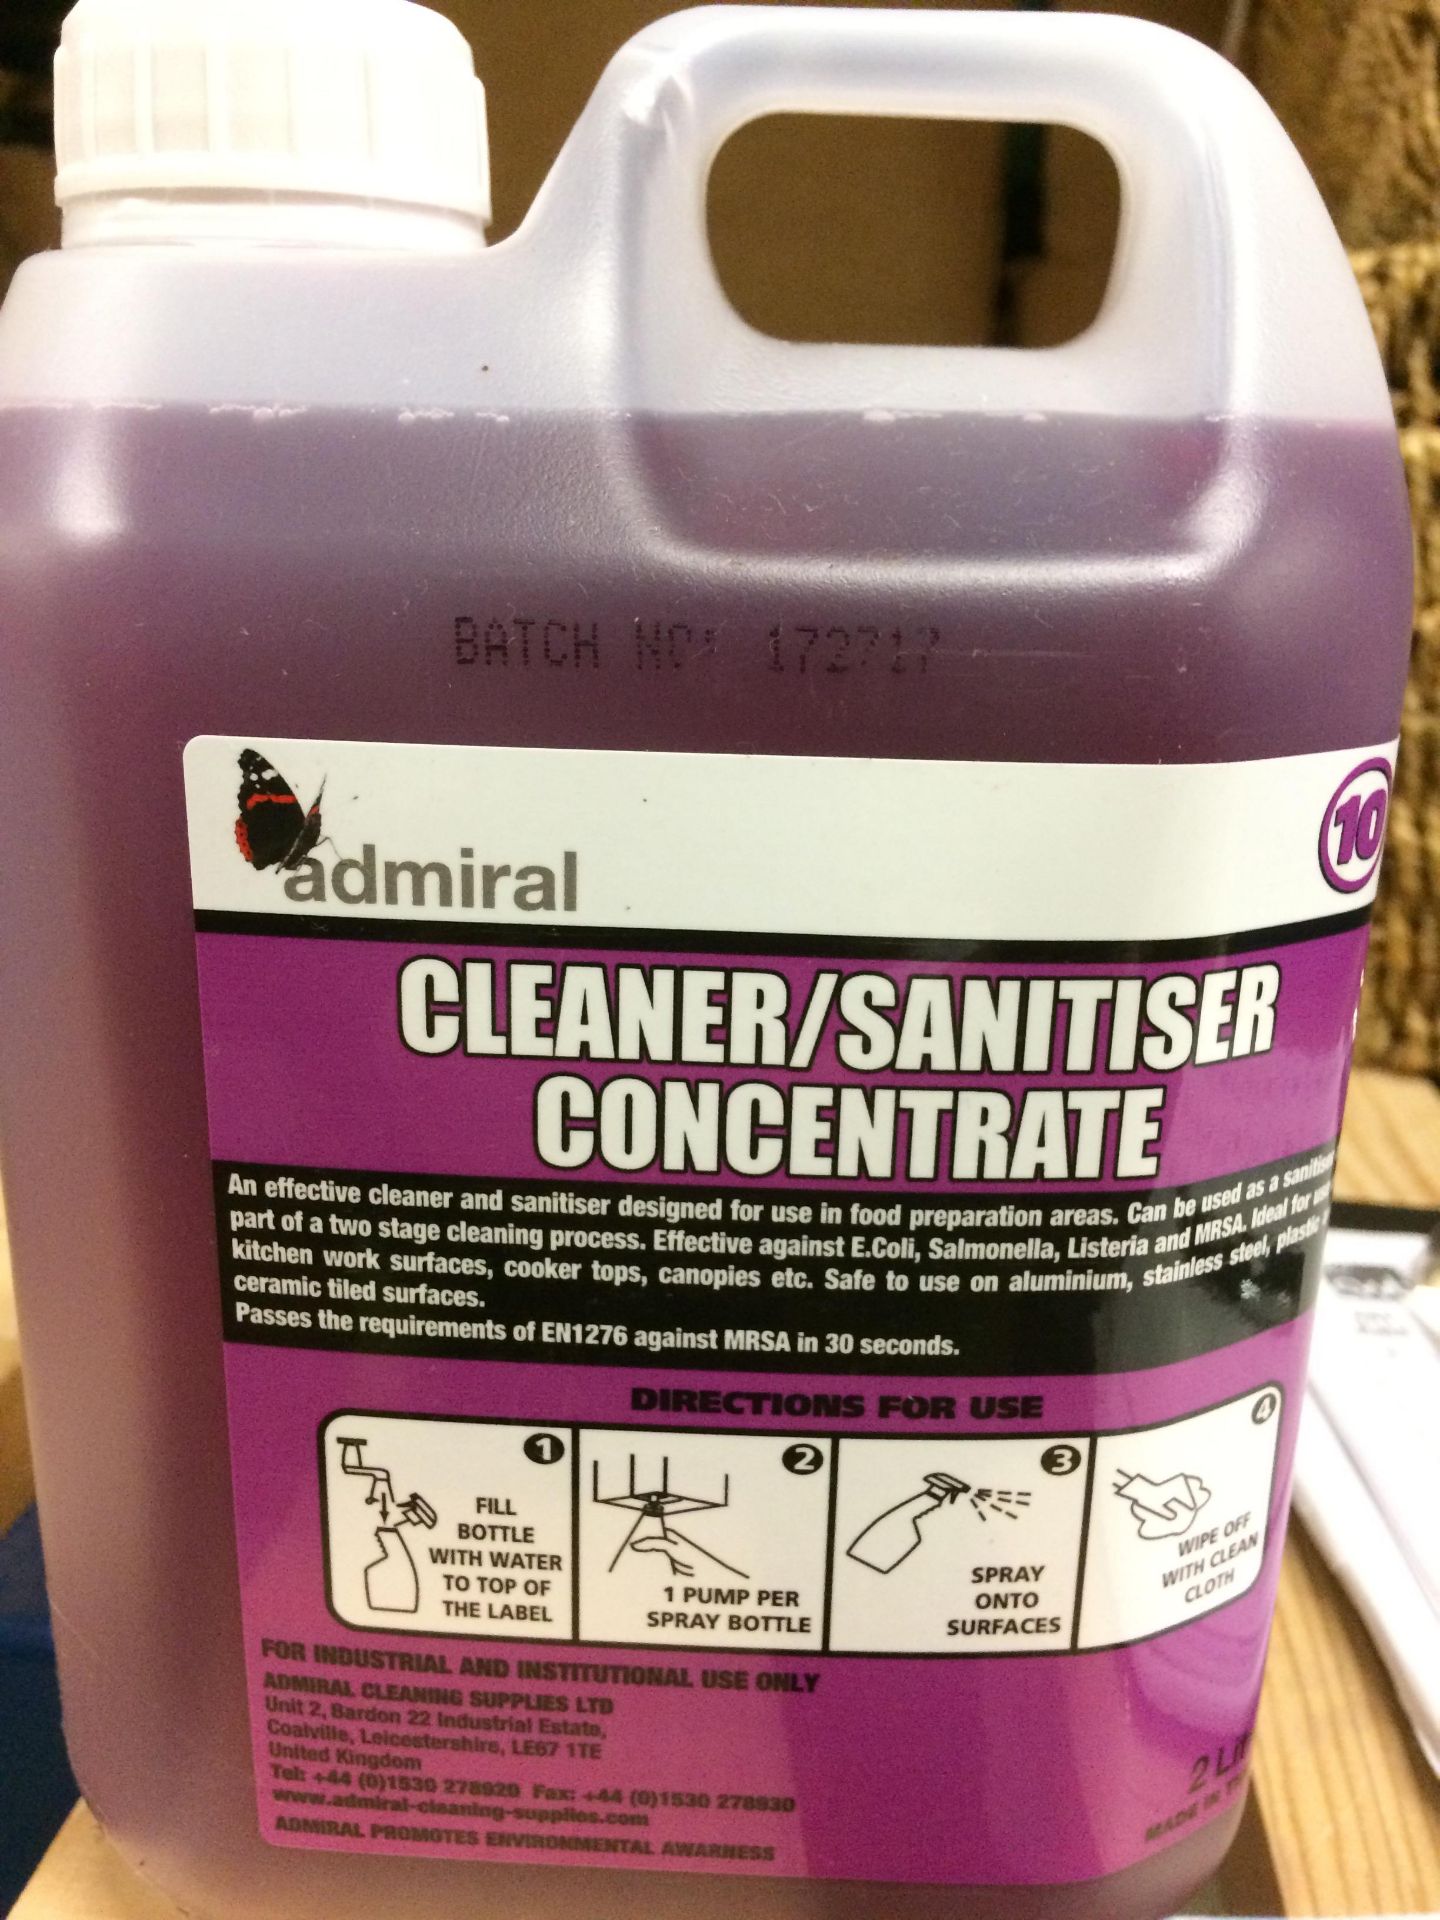 11 x 2L bottles of Admiral cleaner/sanitiser concentrate